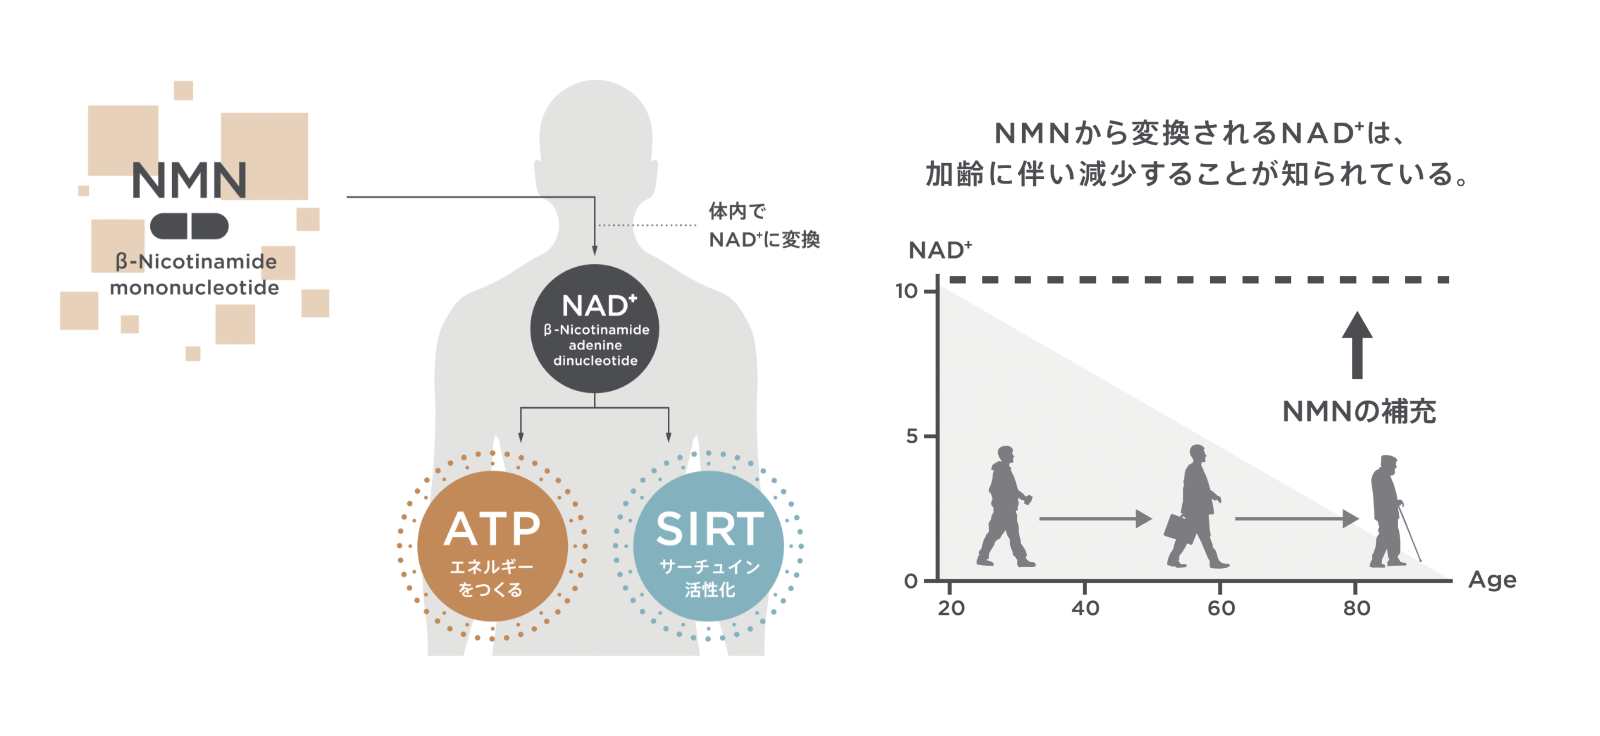 NMNから変換されるNAD+は、加齢に伴い減少することが知られている。